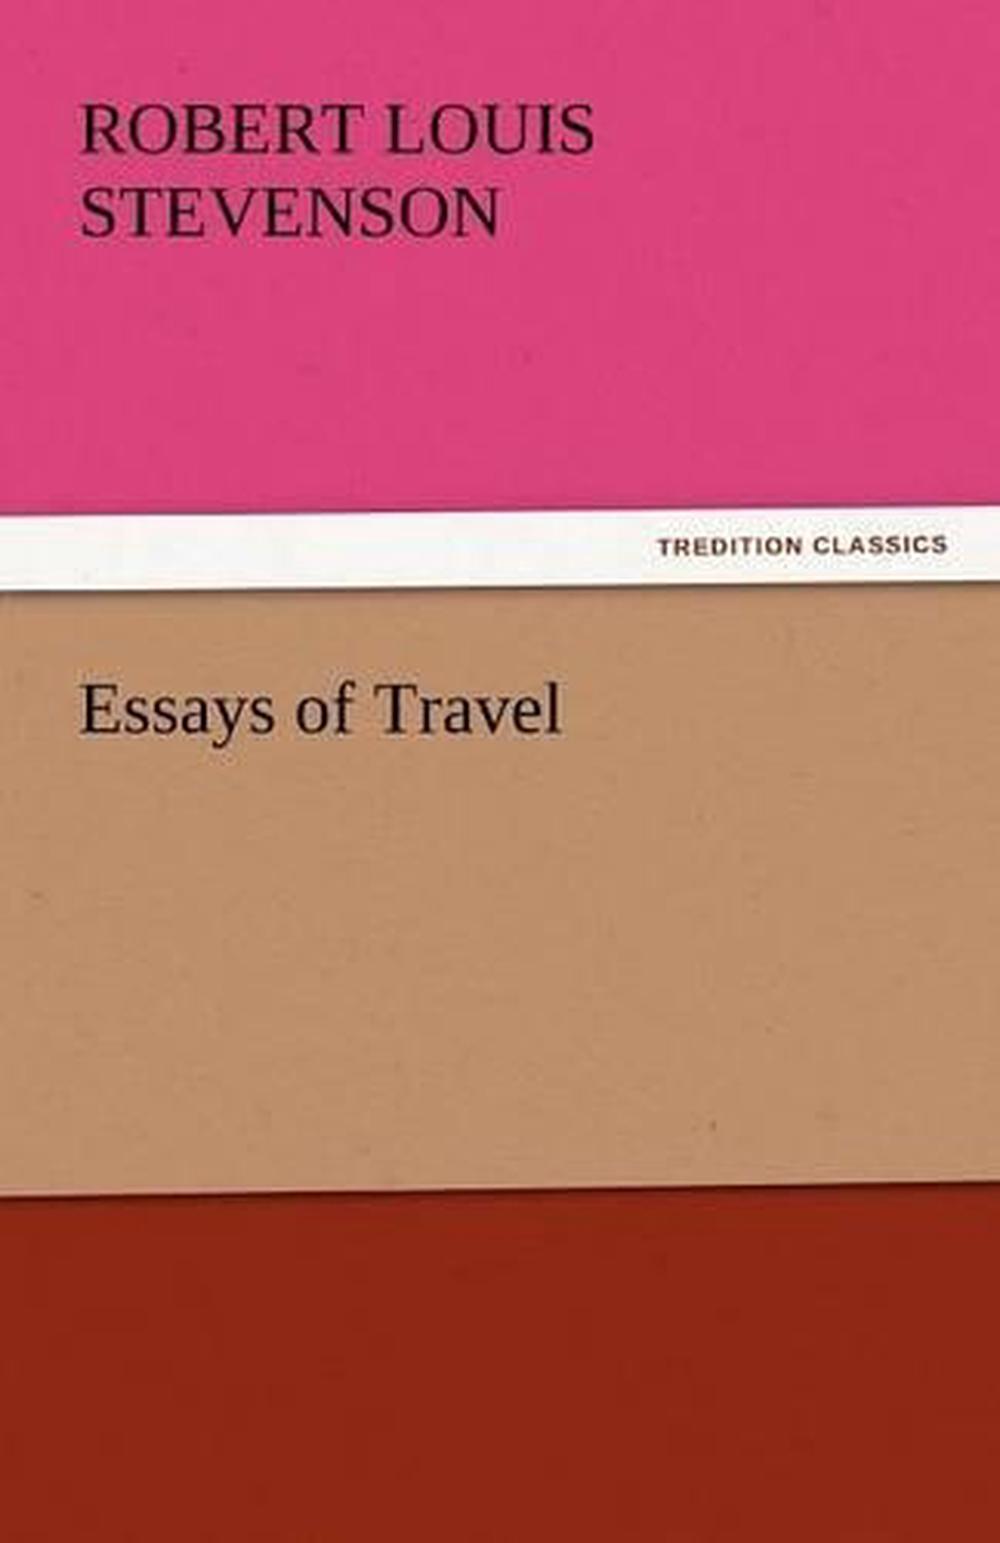 travel by robert louis stevenson summary